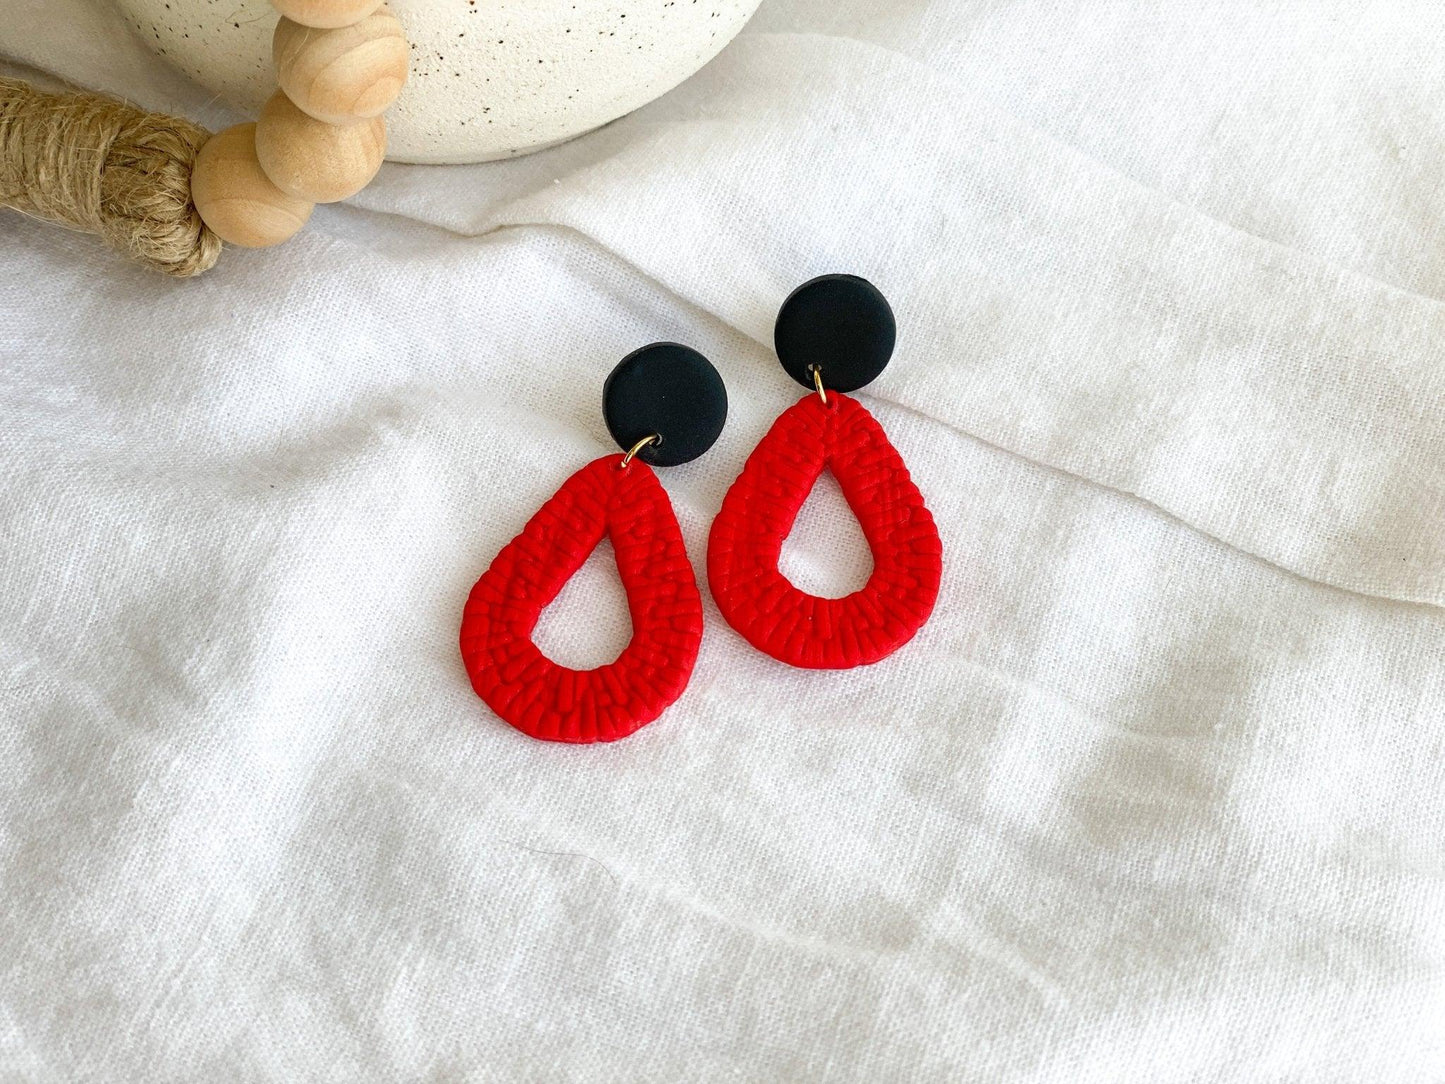 Red Earrings - NCSU Wolfpack Earrings- Game Day Earrings - Nebraska Earrings - Handmade Jewelry - Polymer Clay Earrings - Surgical Steel - Harbor to Gulf Co.